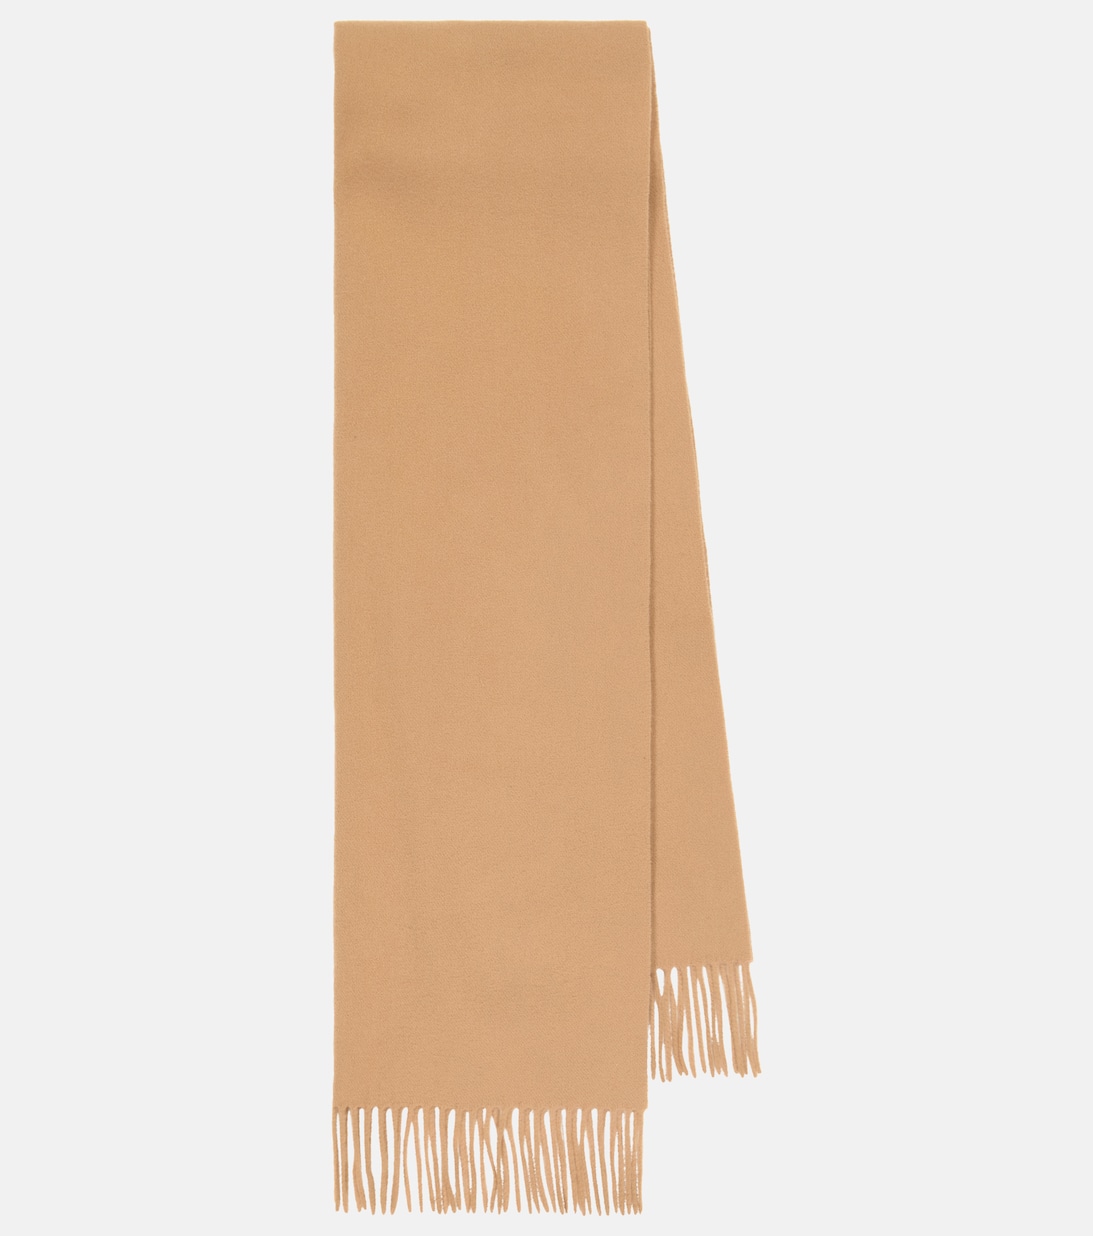 Шерстяной шарф Toteme, коричневый jnby коричневый шерстяной шарф jnby